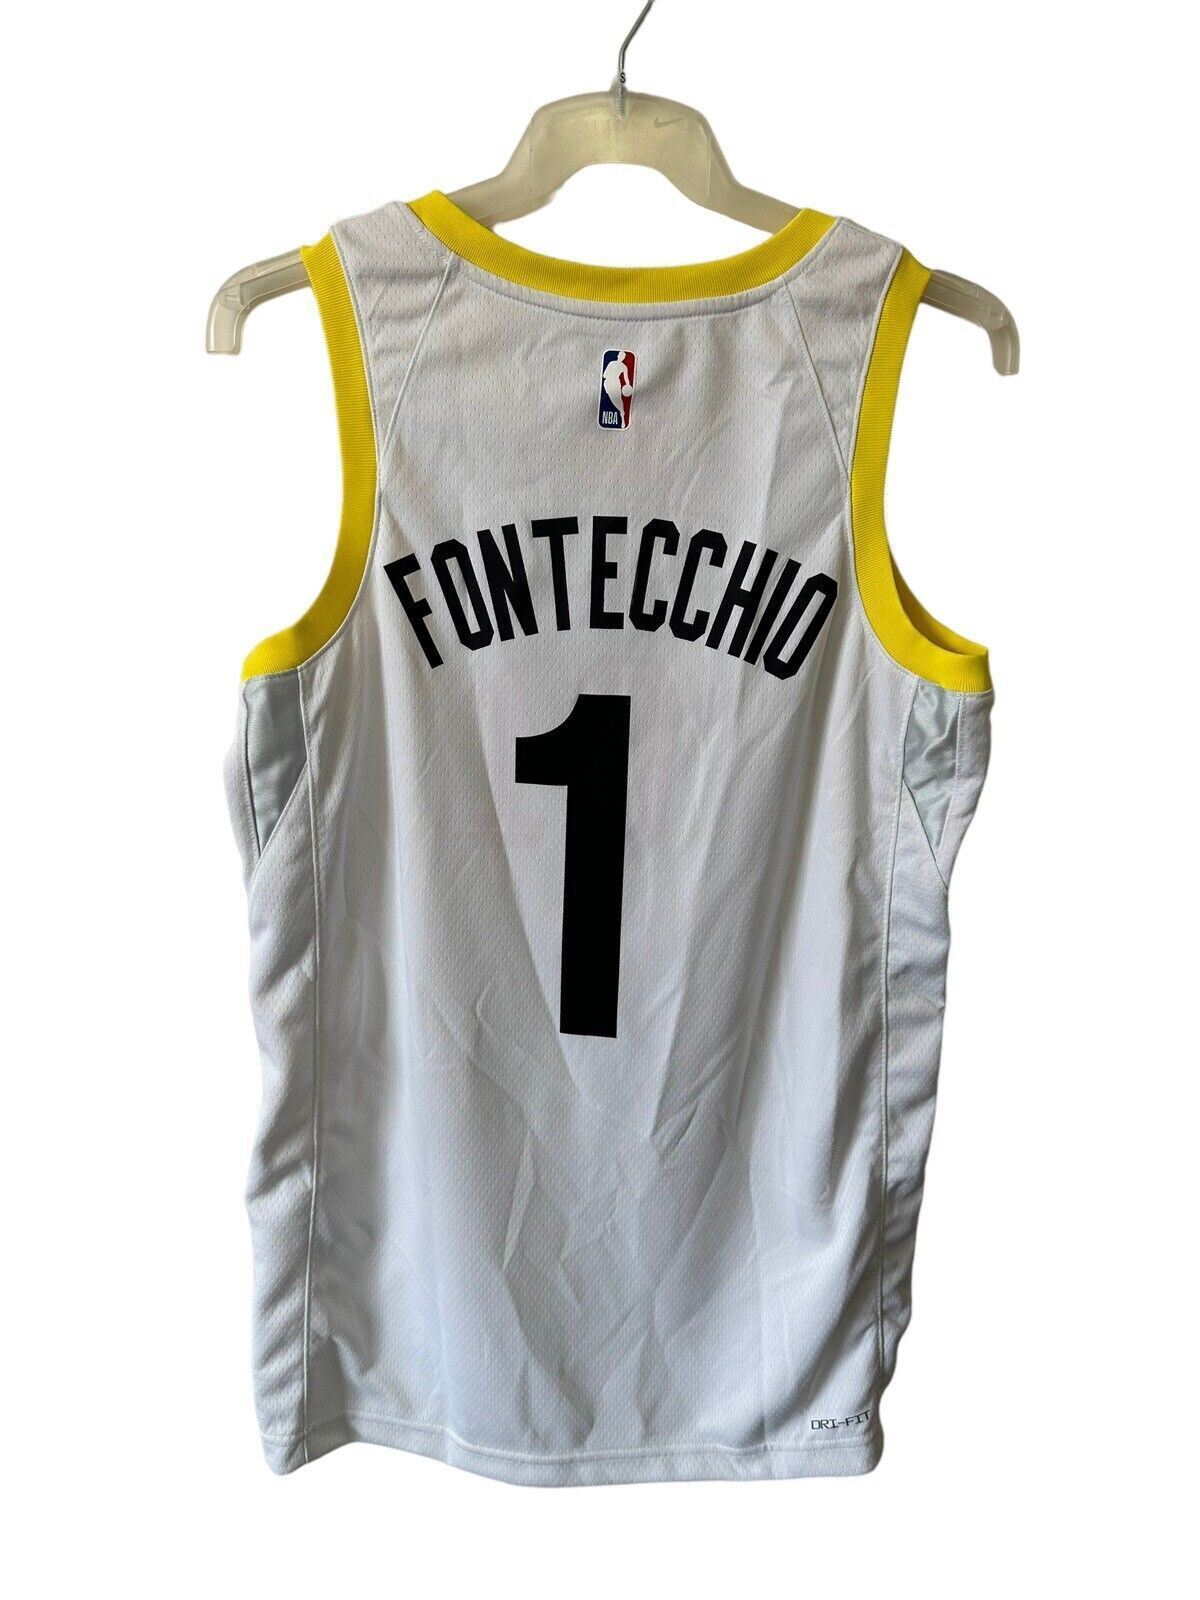 Nike NBA Utah Jazz Association Edition Jersey FONTECCHIO 1 Basketball Mens M